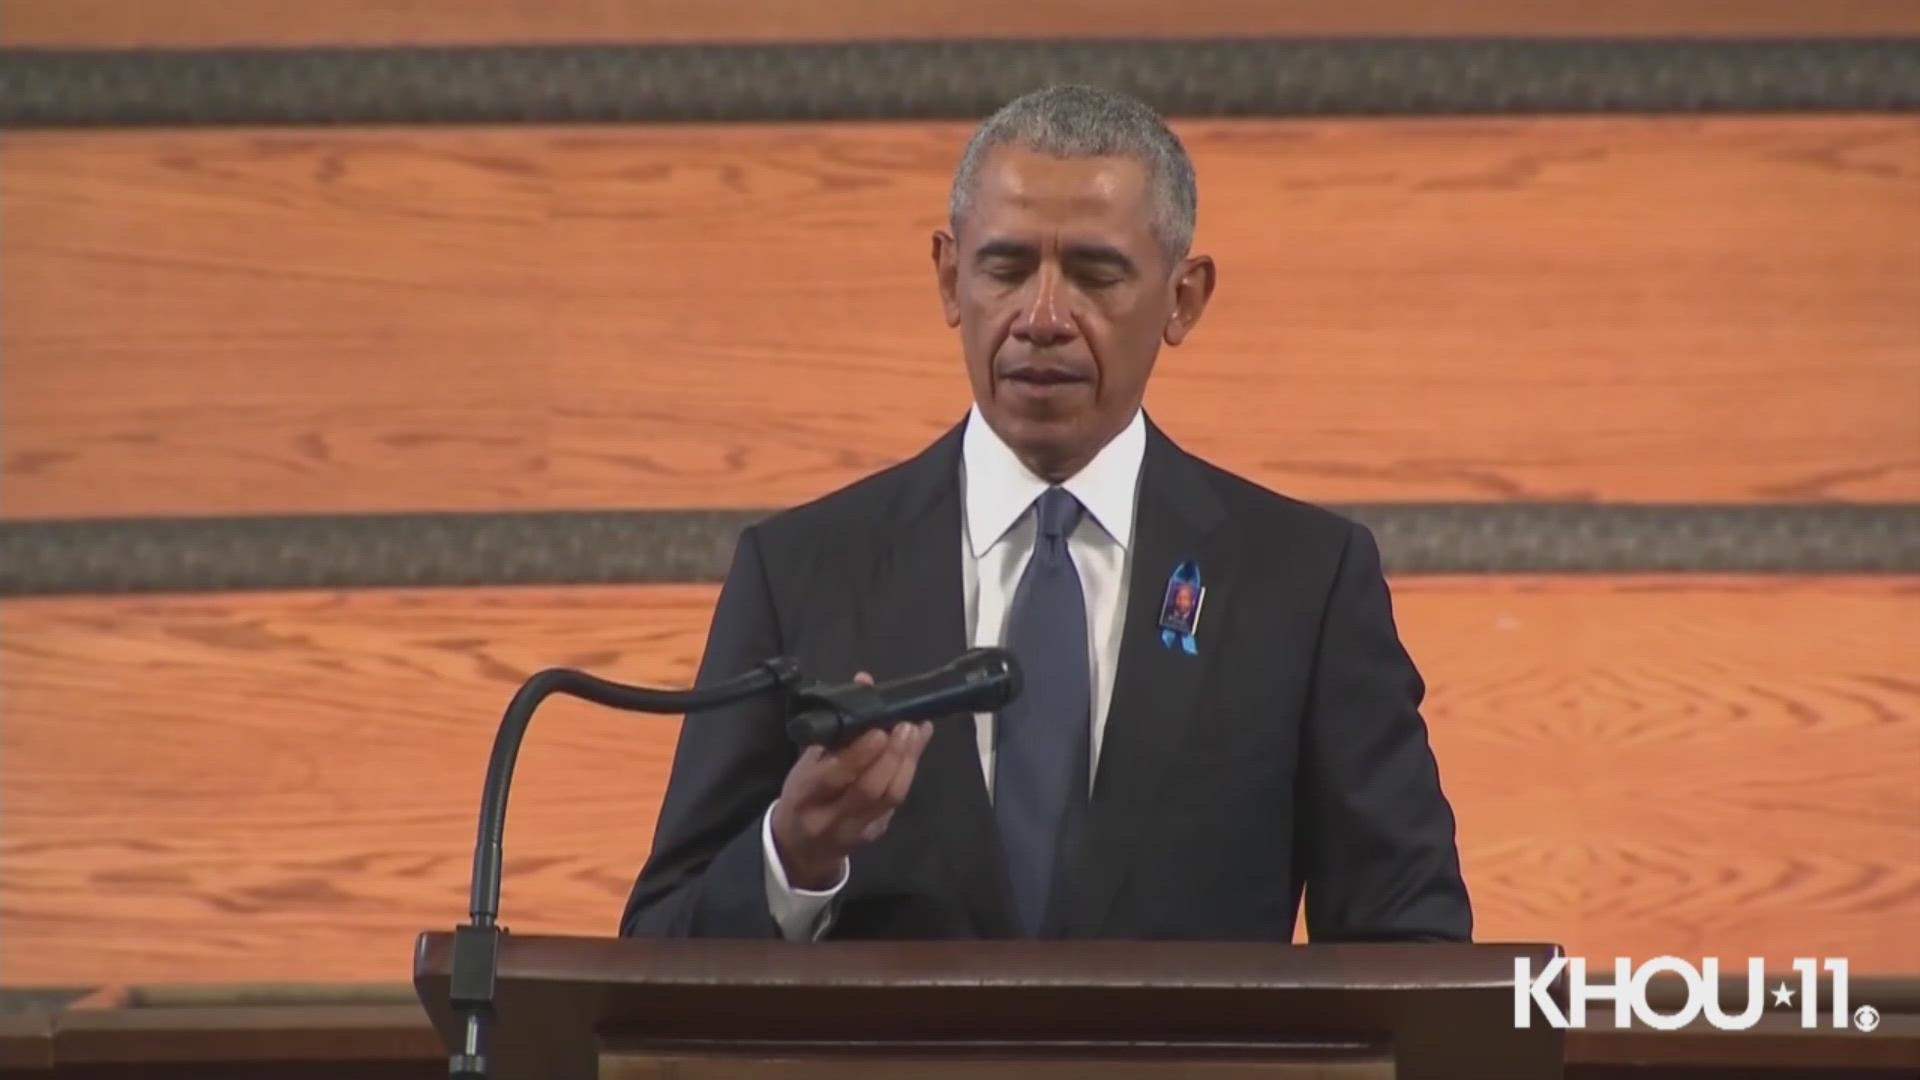 Former President Barack Obama delivered the eulogy reflecting on the legacy of Rep. John Lewis Thursday.